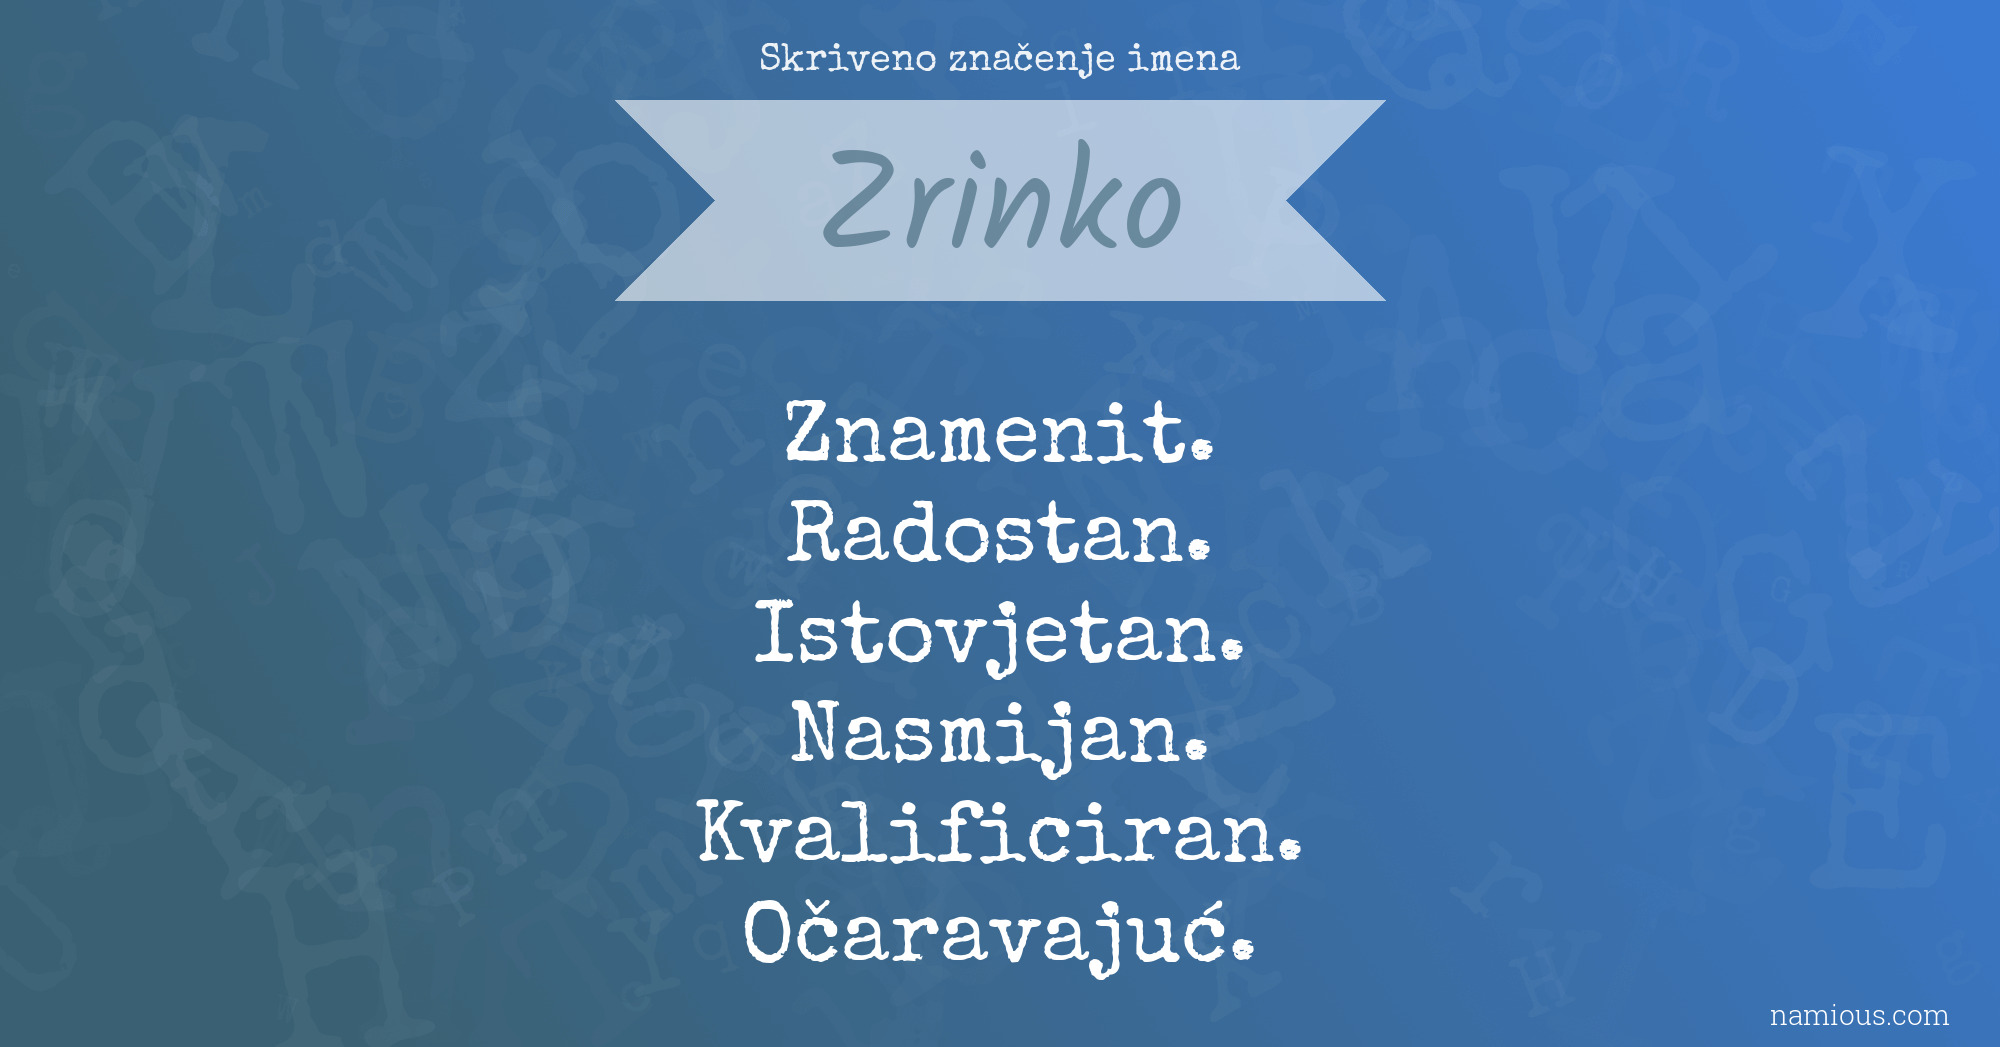 Skriveno značenje imena Zrinko